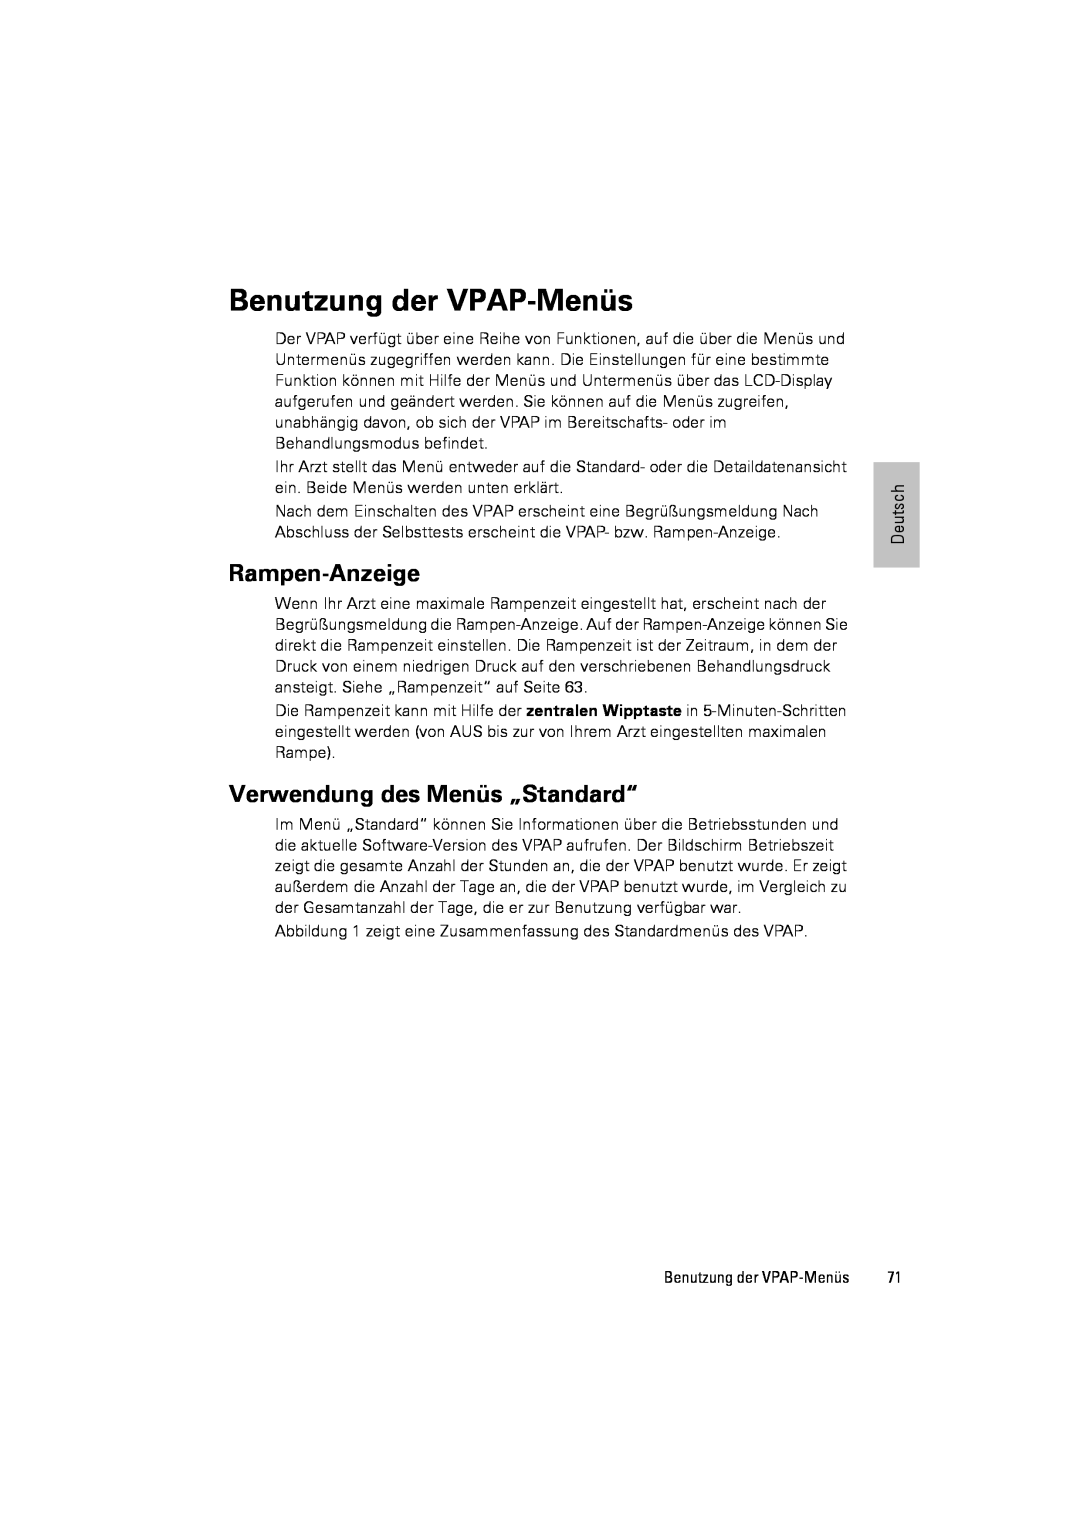 ResMed III & III ST user manual Benutzung der VPAP-Menüs, Rampen-Anzeige, Verwendung des Menüs „Standard“ 